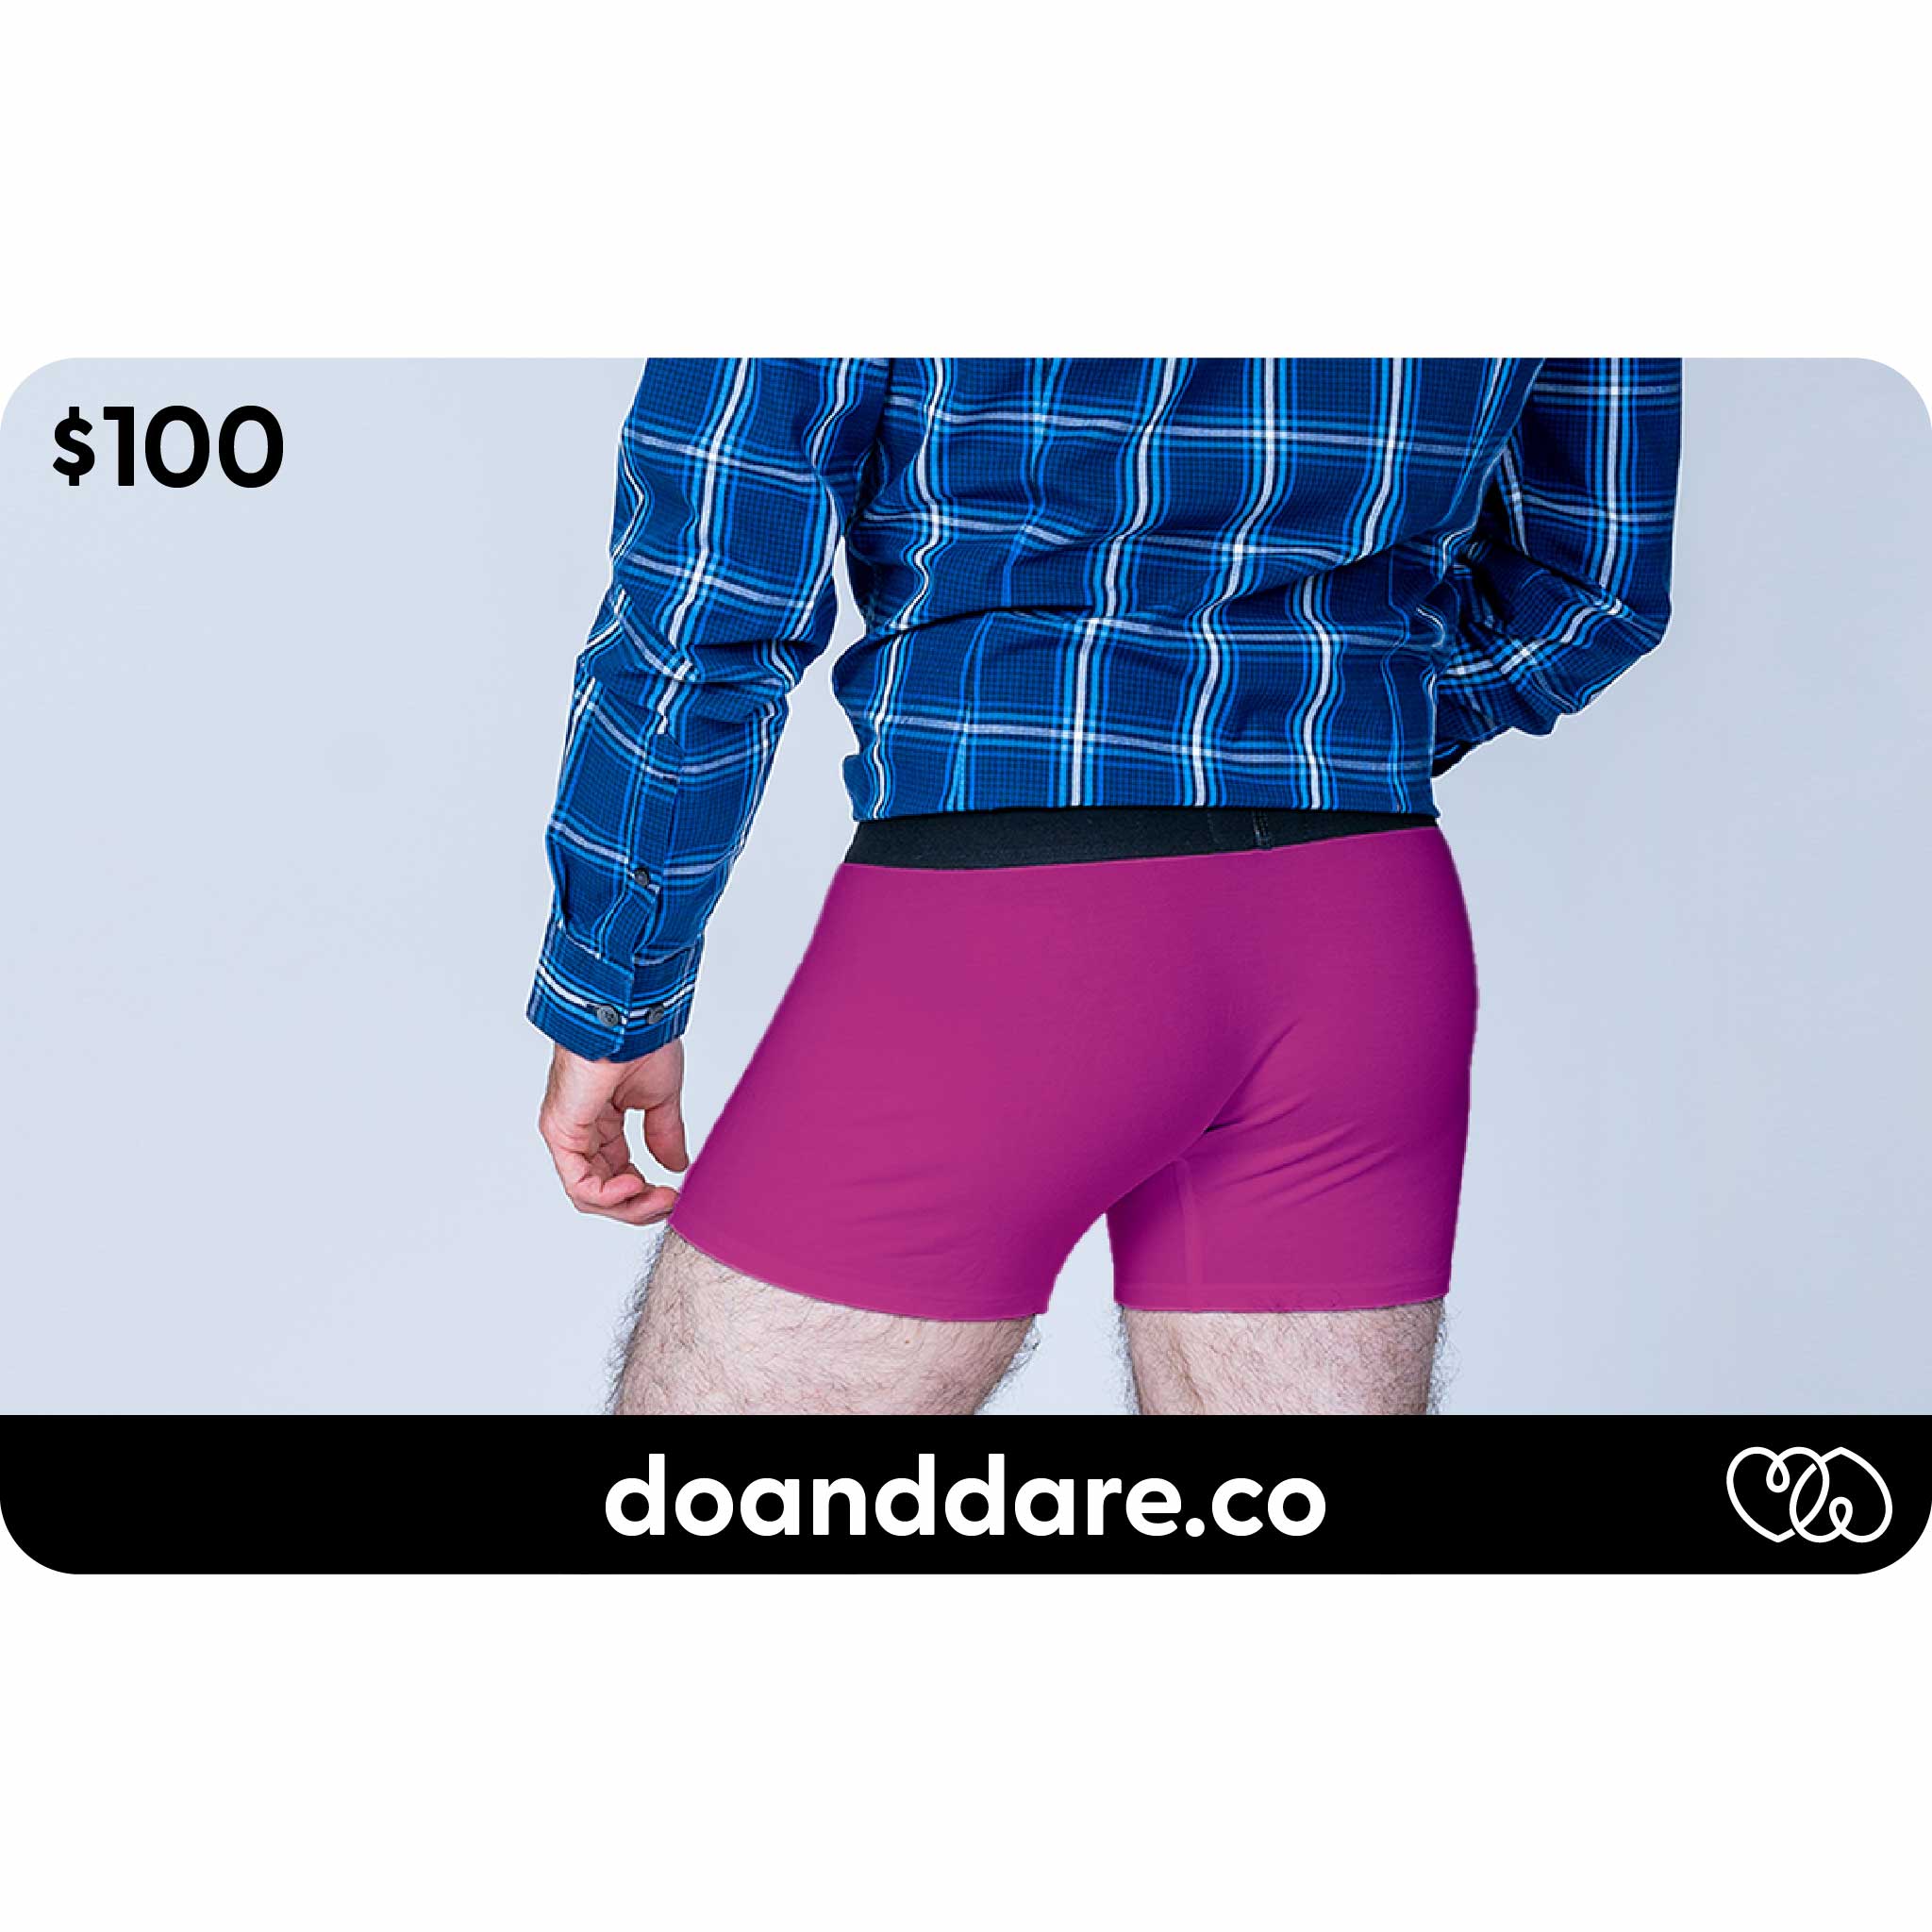 do+dare undie co. - $100 gift card showing rob wearing fuchsia pink boxer briefs underwear in a plaid blue dress shirt